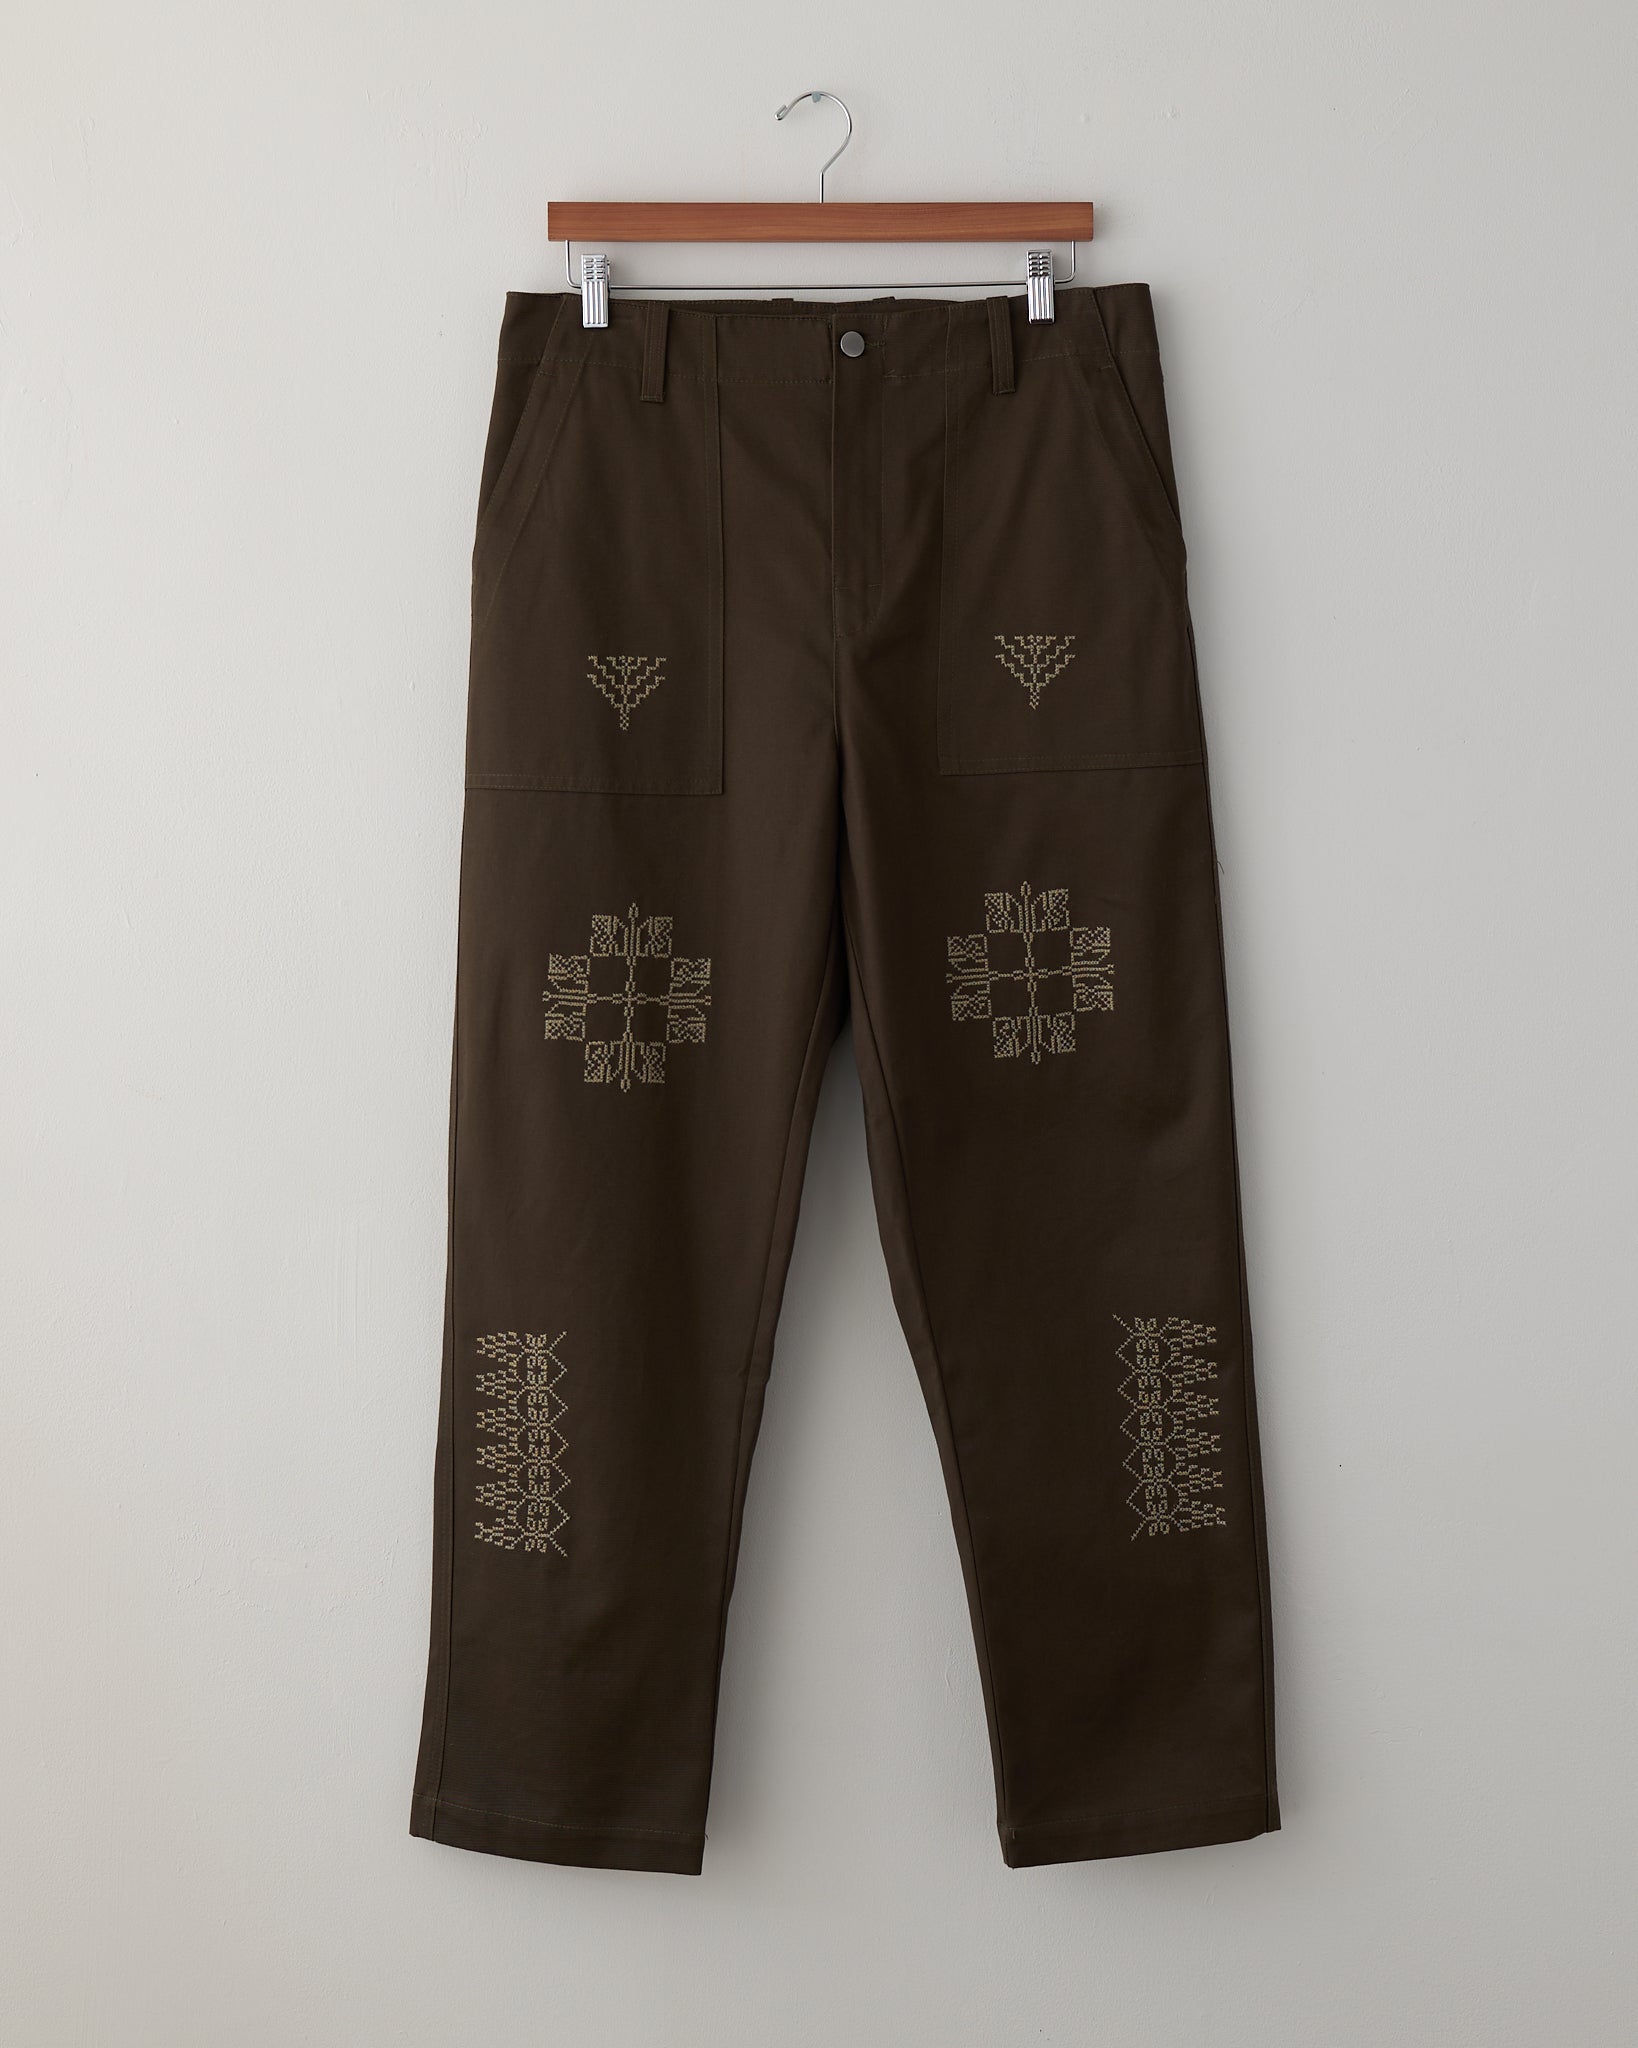 Makhlut Worker Cotton Chino Pants, Dark Brown